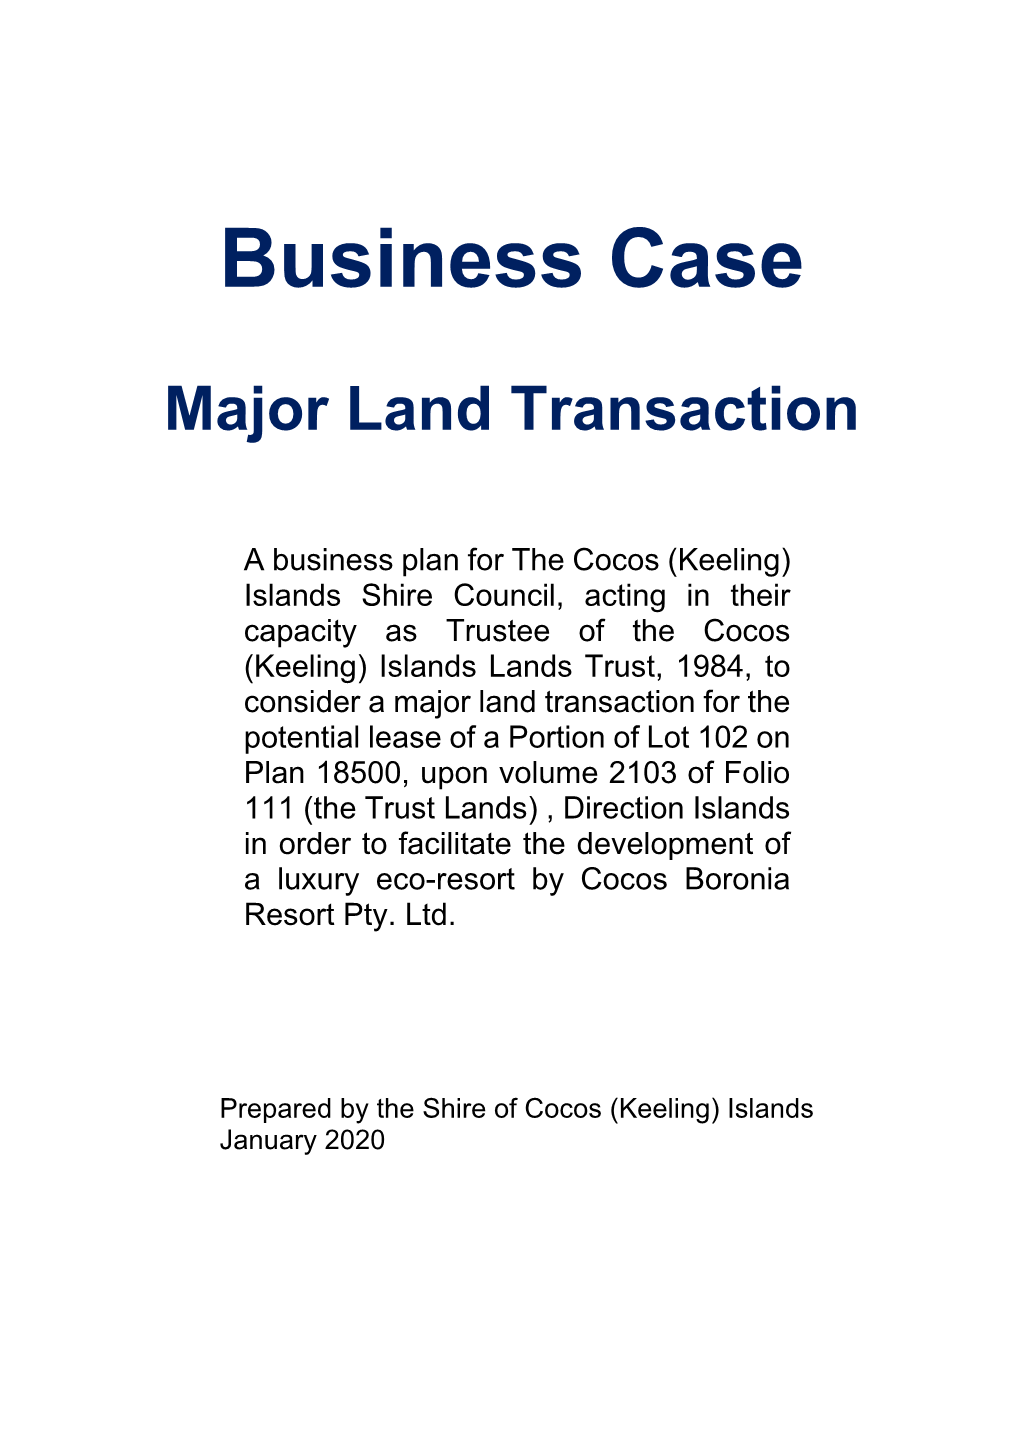 Business Case Major Land Transaction Direction Island